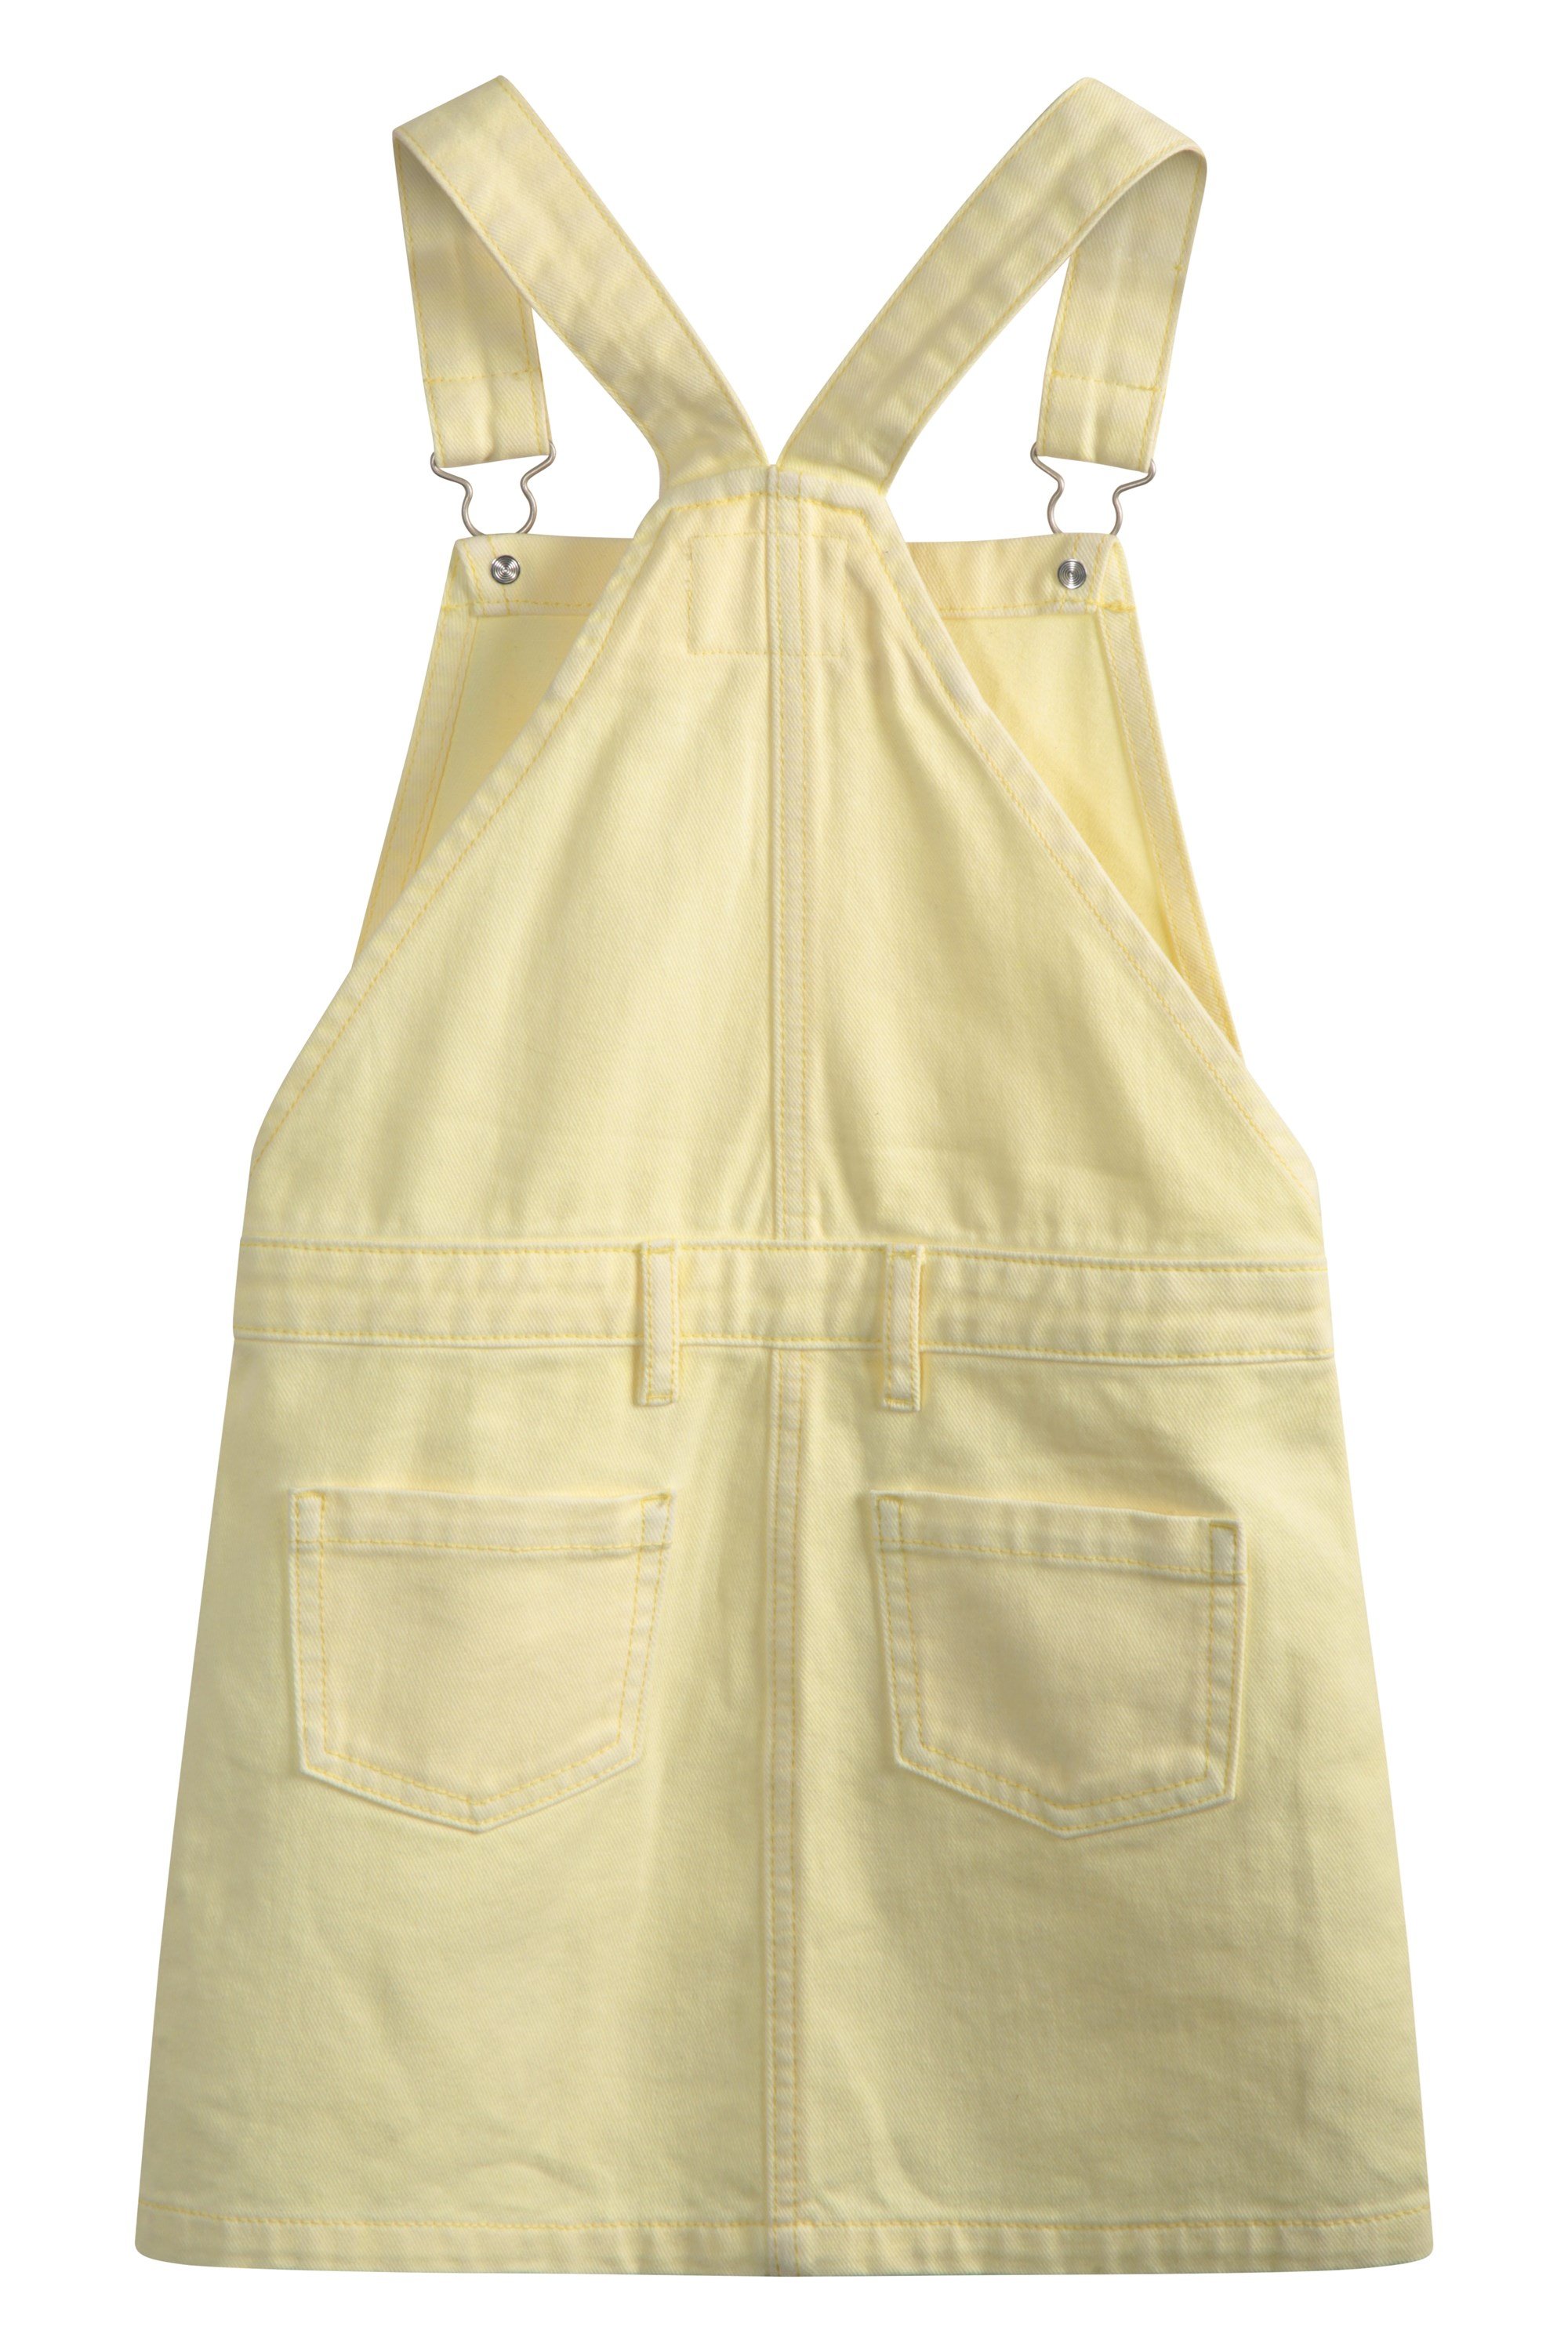 Outdoors Mountain Warehouse Kids Denim Dungaree Dress Lightweight Girls Clothing- Best for Summer Holidays Adjustable fit